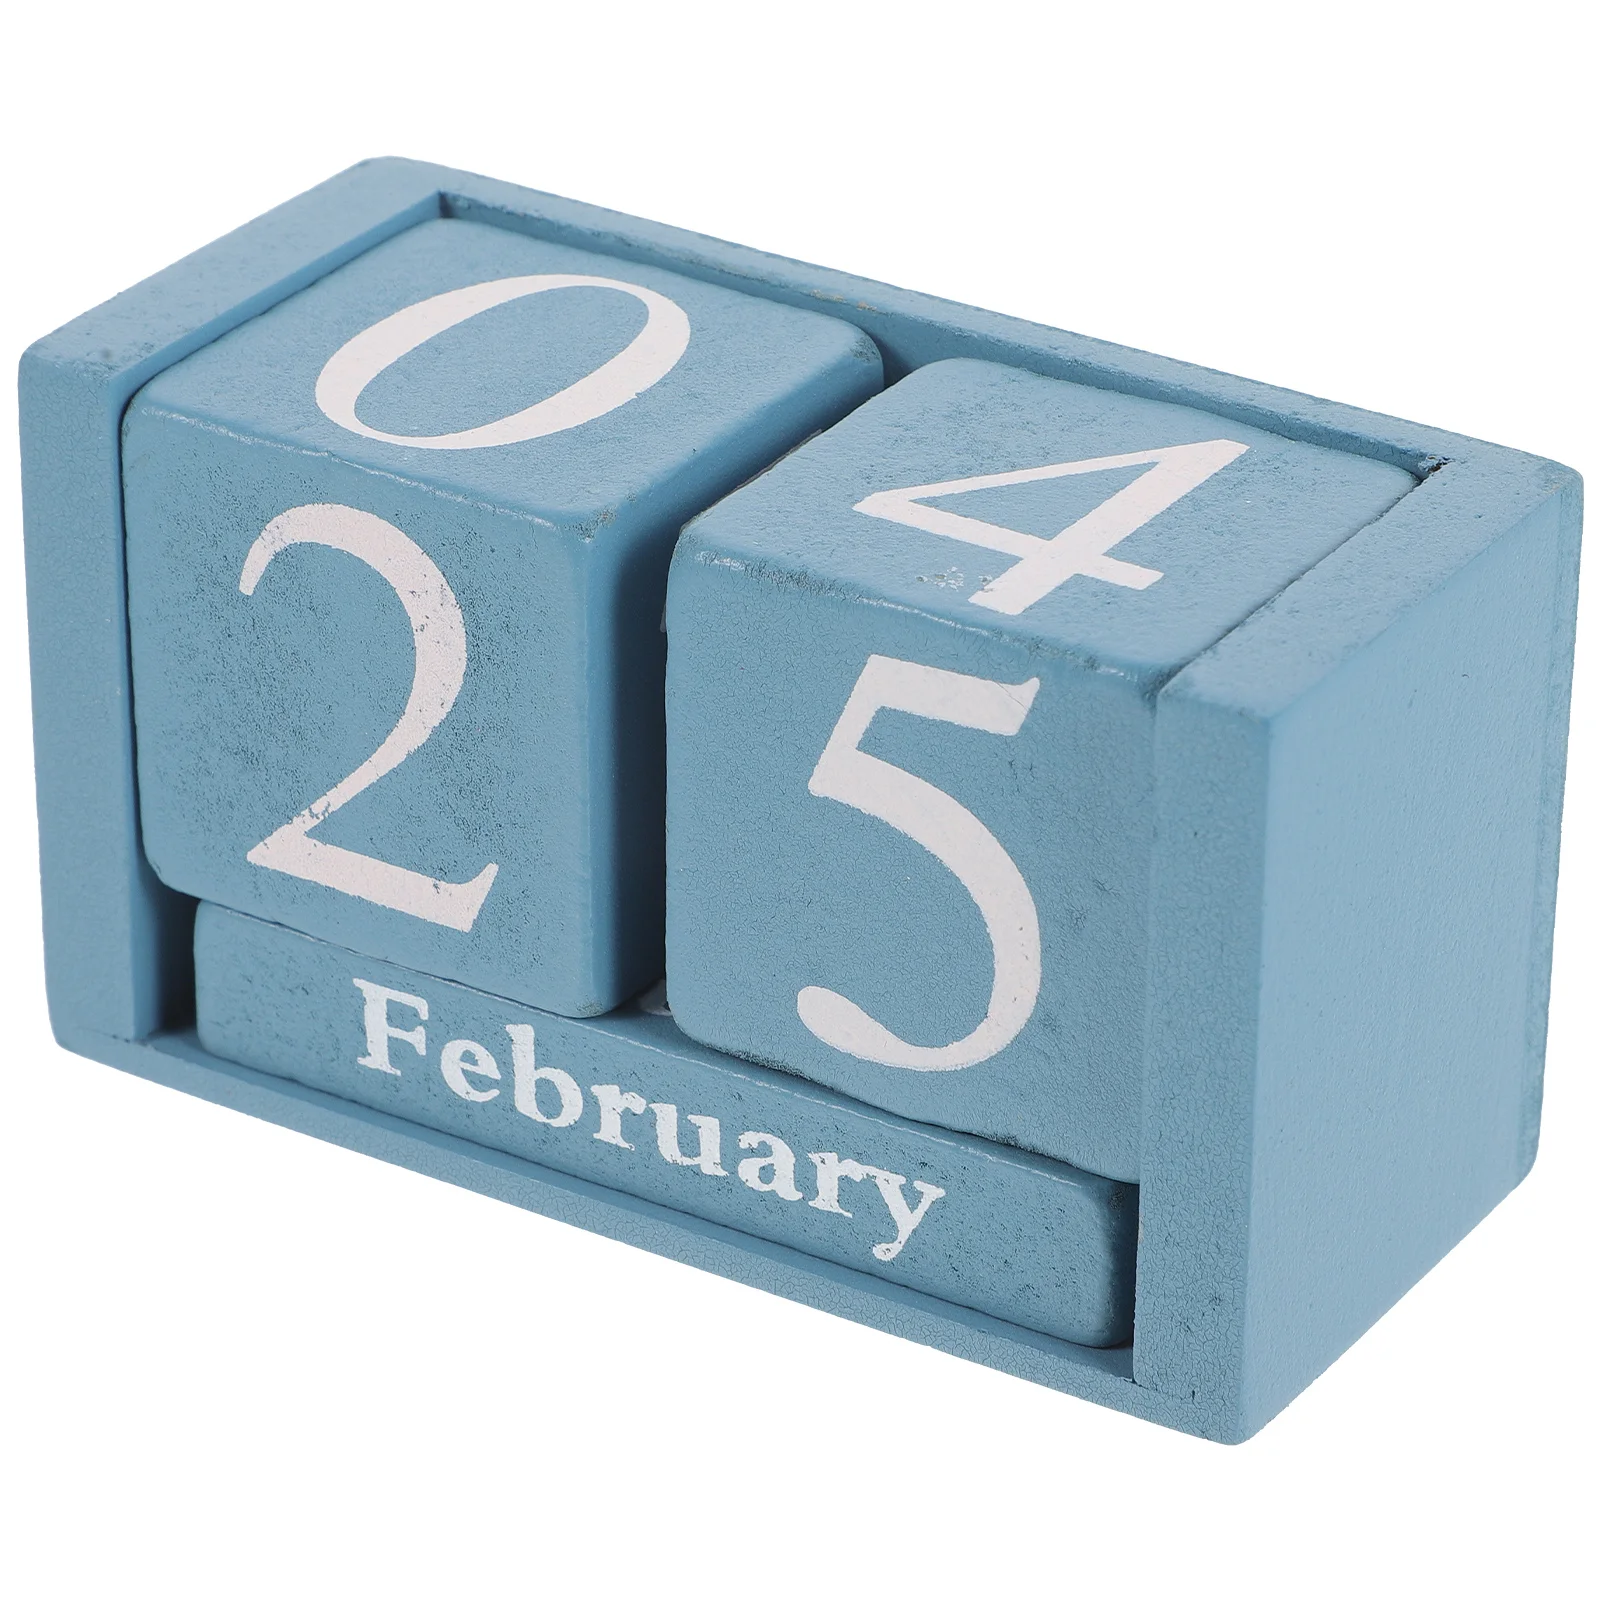 

Wooden Perpetual Calendar Desk Calendars Countdown Rural Block Living Room Decoration Teacher Table Home